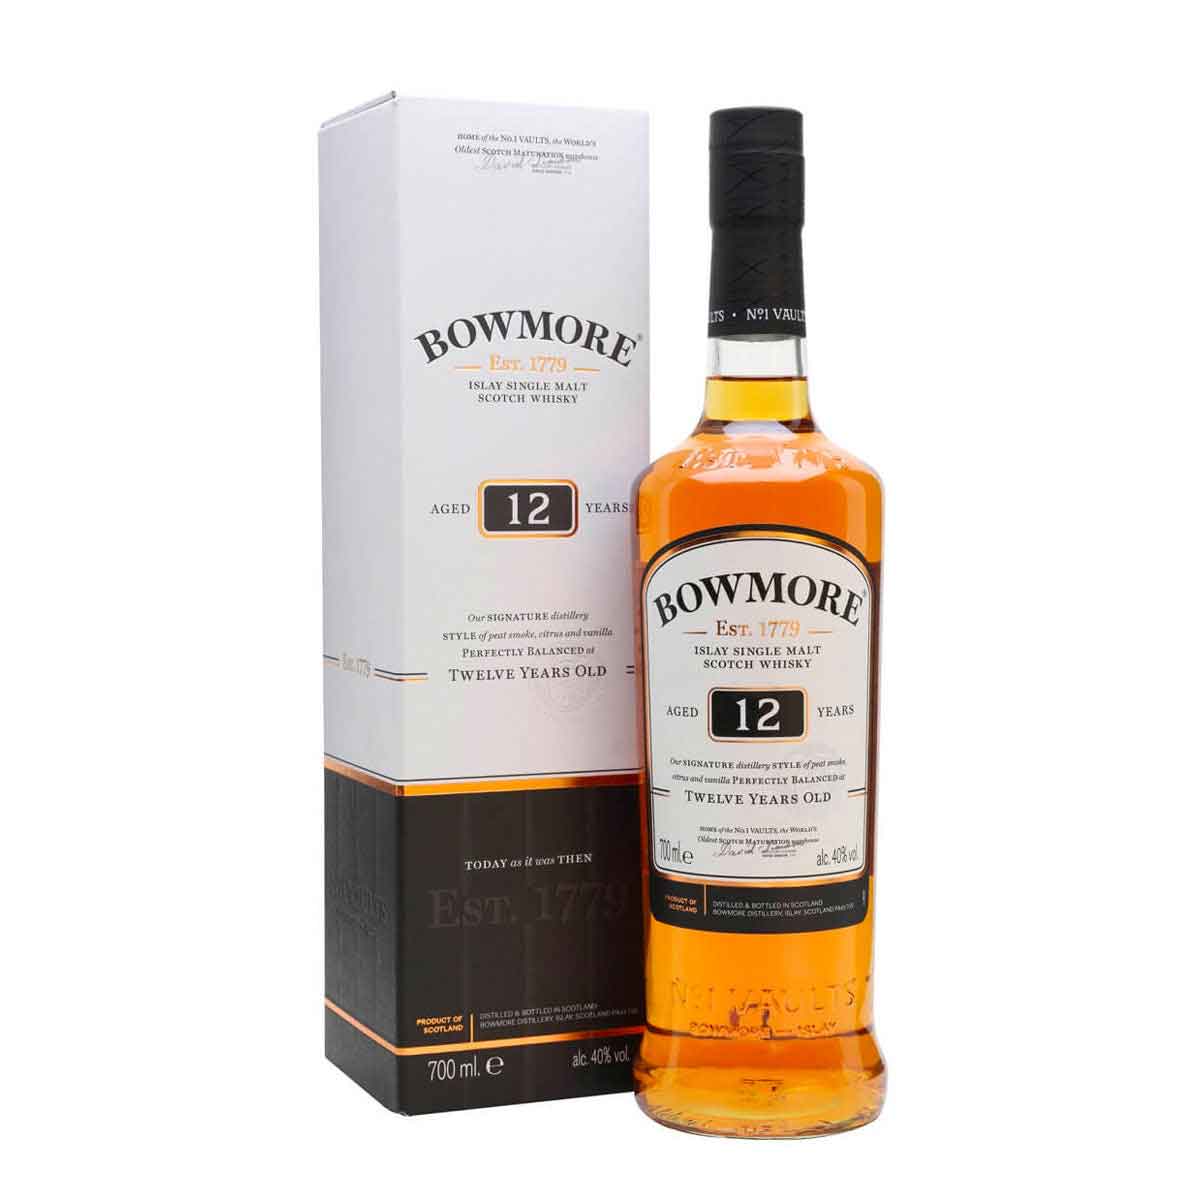 TAG Liquor Stores BC-Bowmore 12 Year Old Islay Single Malt Scotch Whisky 750ml